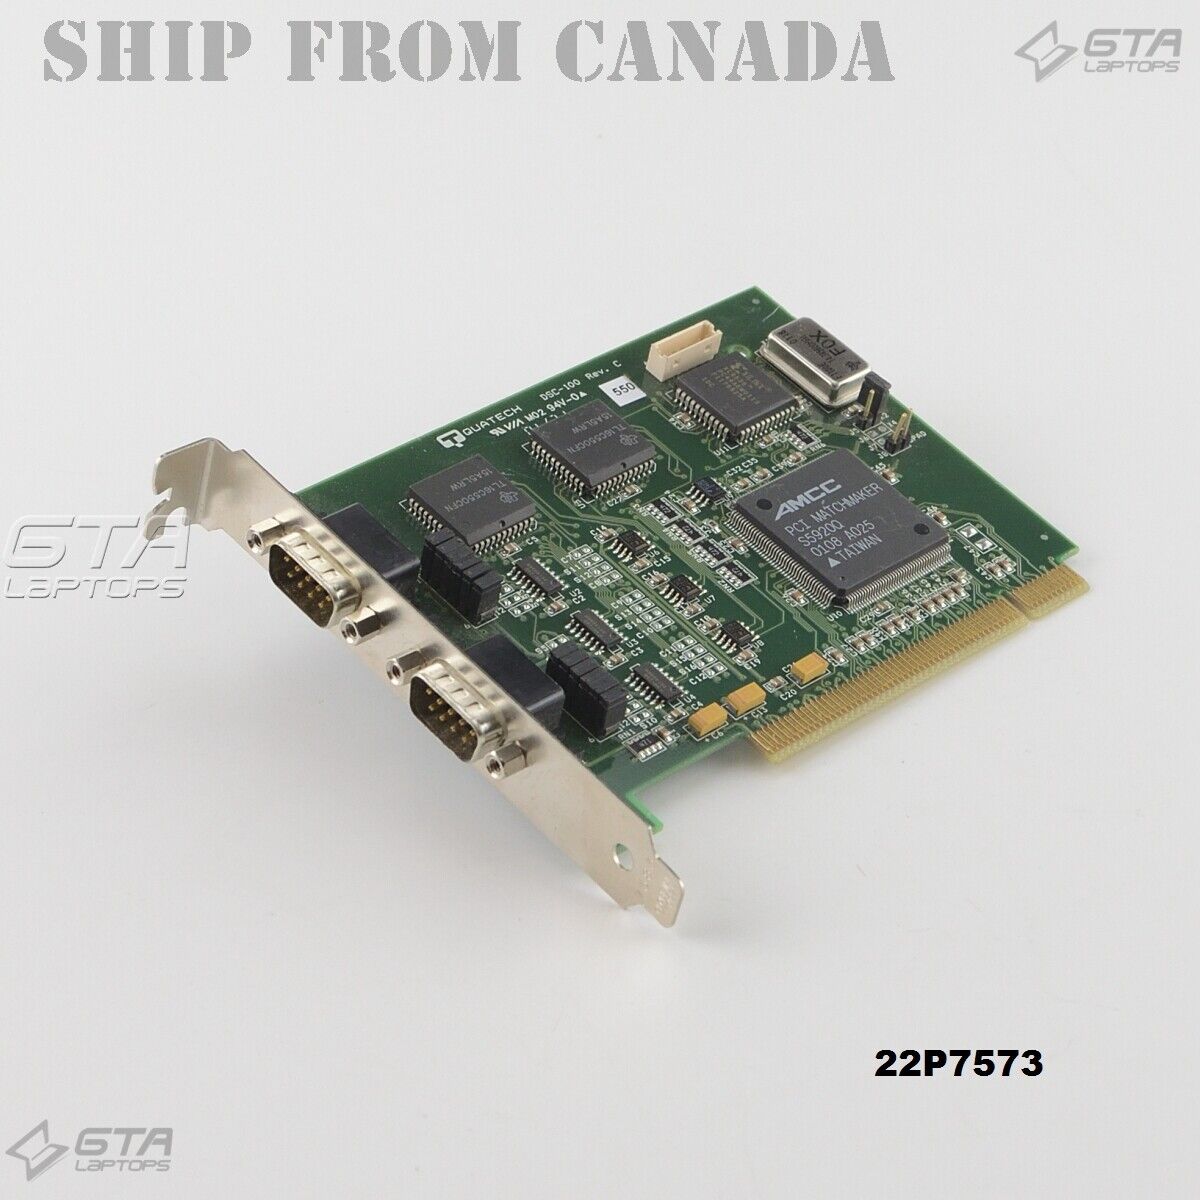 Quatech DSC-100 Serial 2-Port RS232 PCI Adapter Card 22P7573